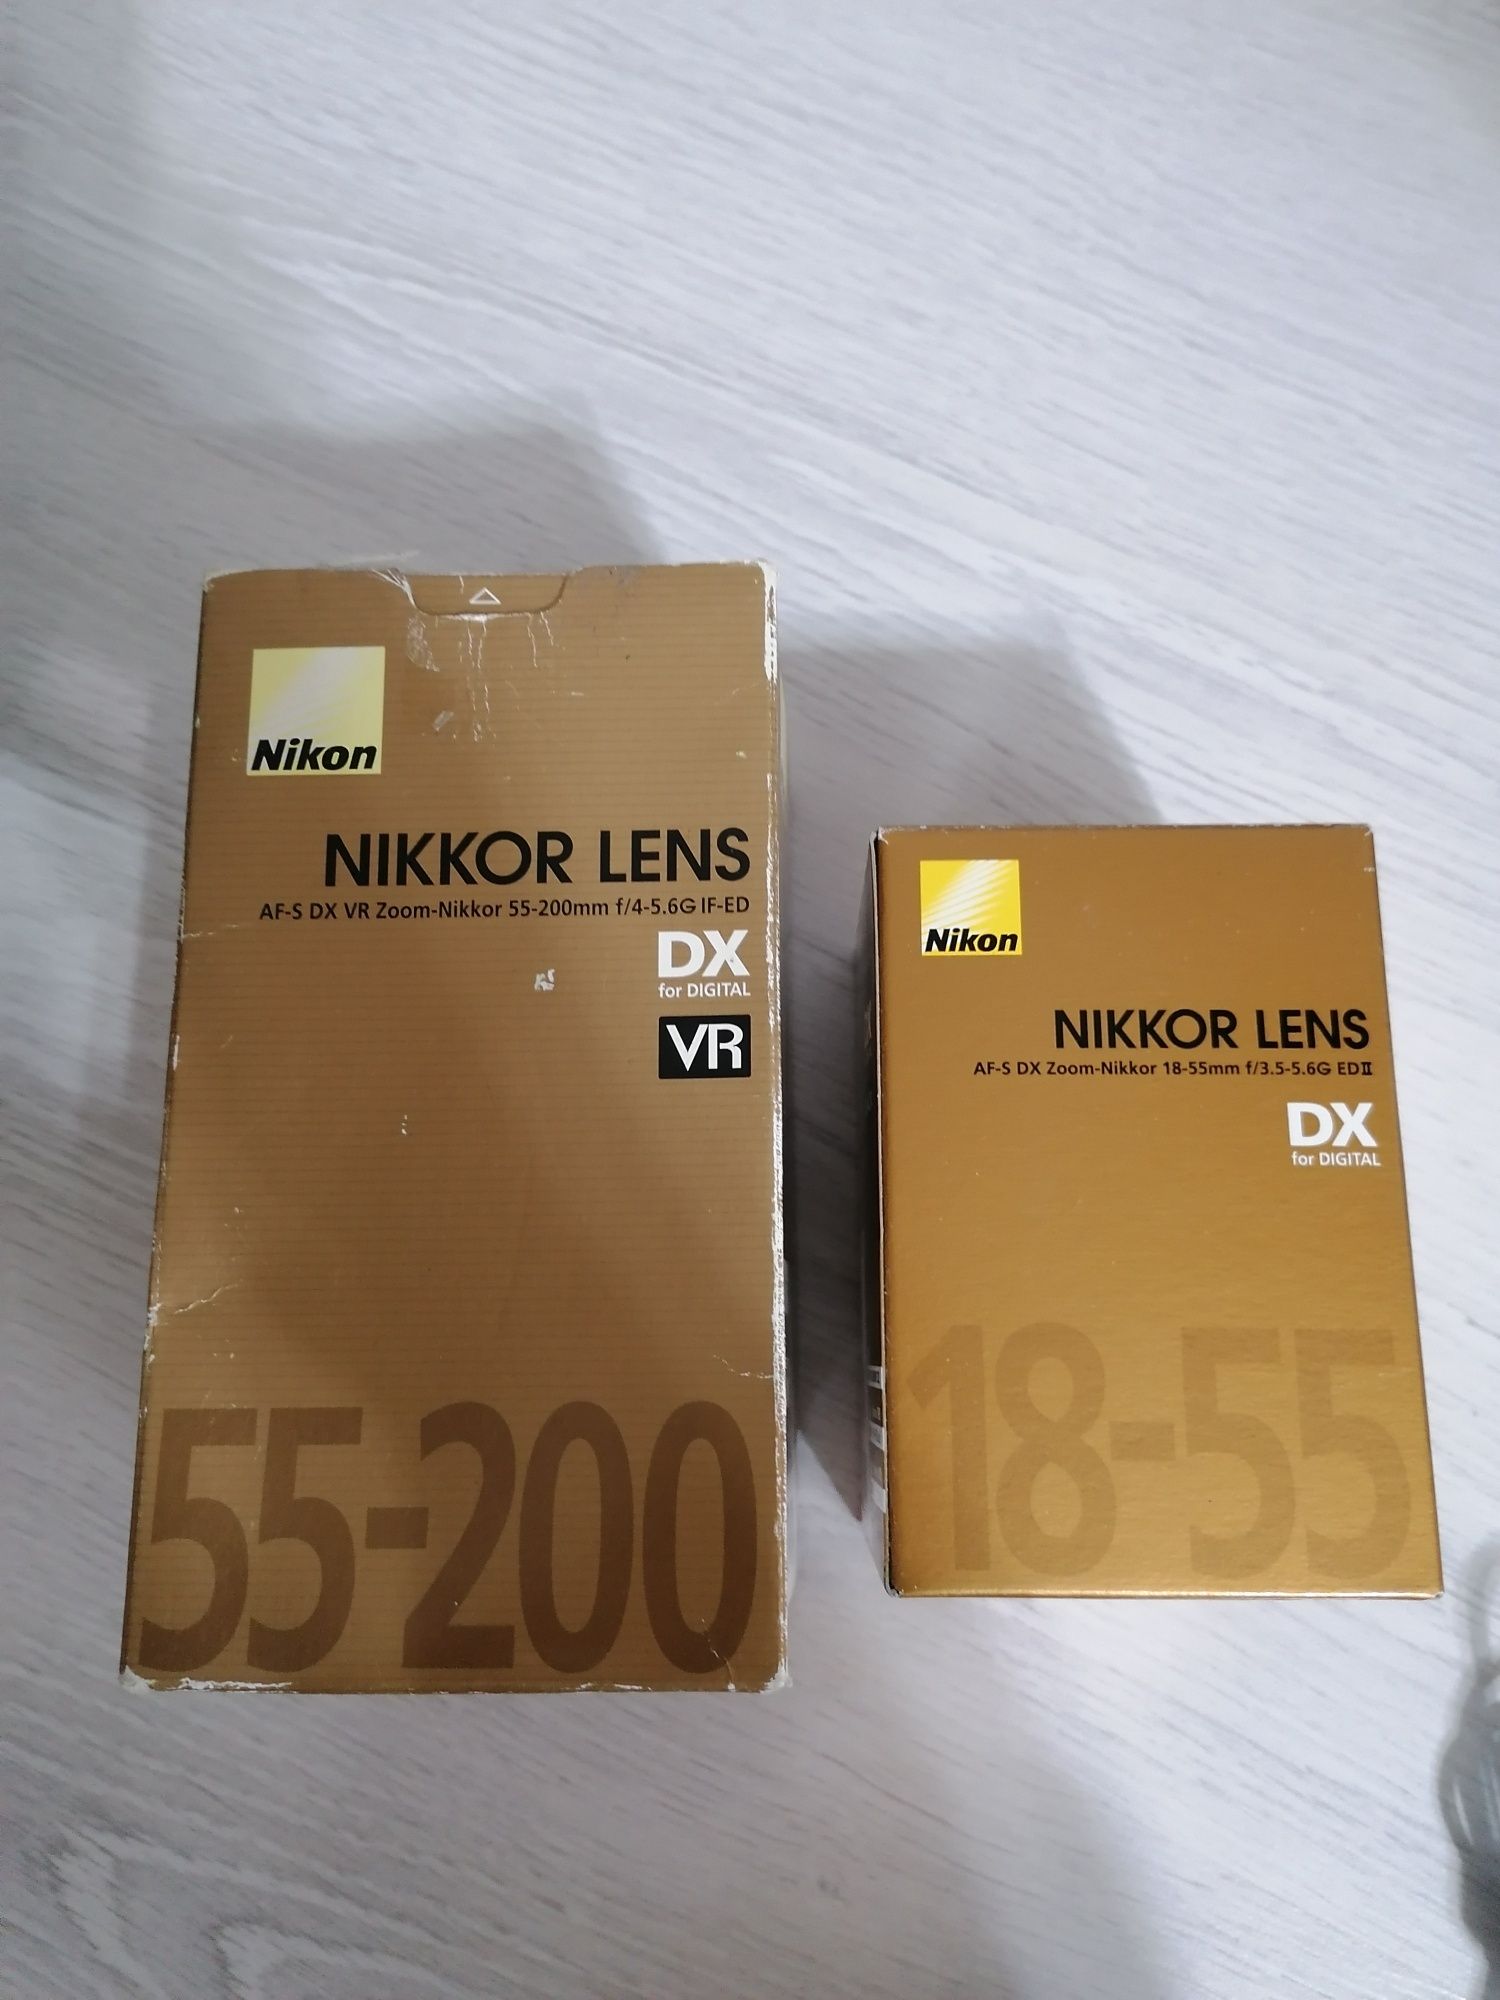 Aparat foto DSLR Nikon D7000 + accesorii